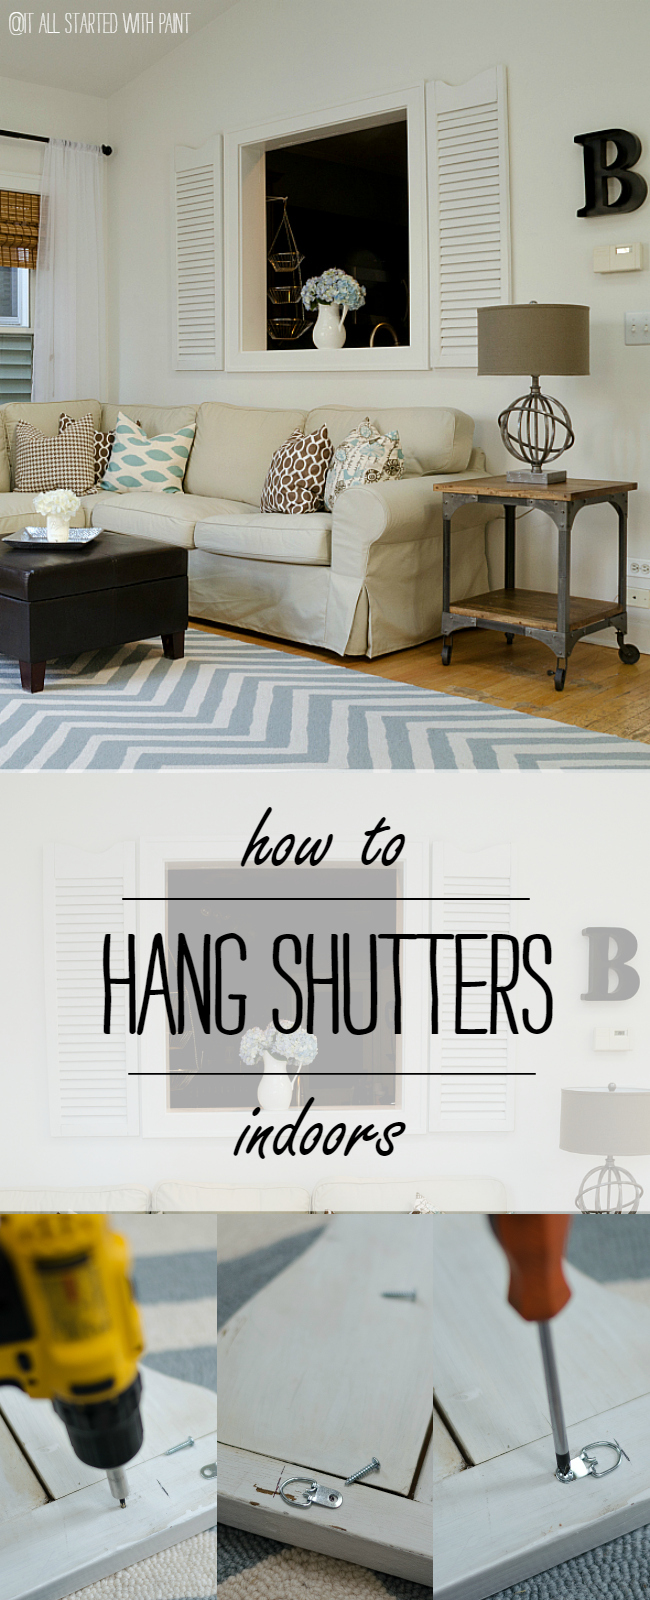 How To Hang Shutters Indoors